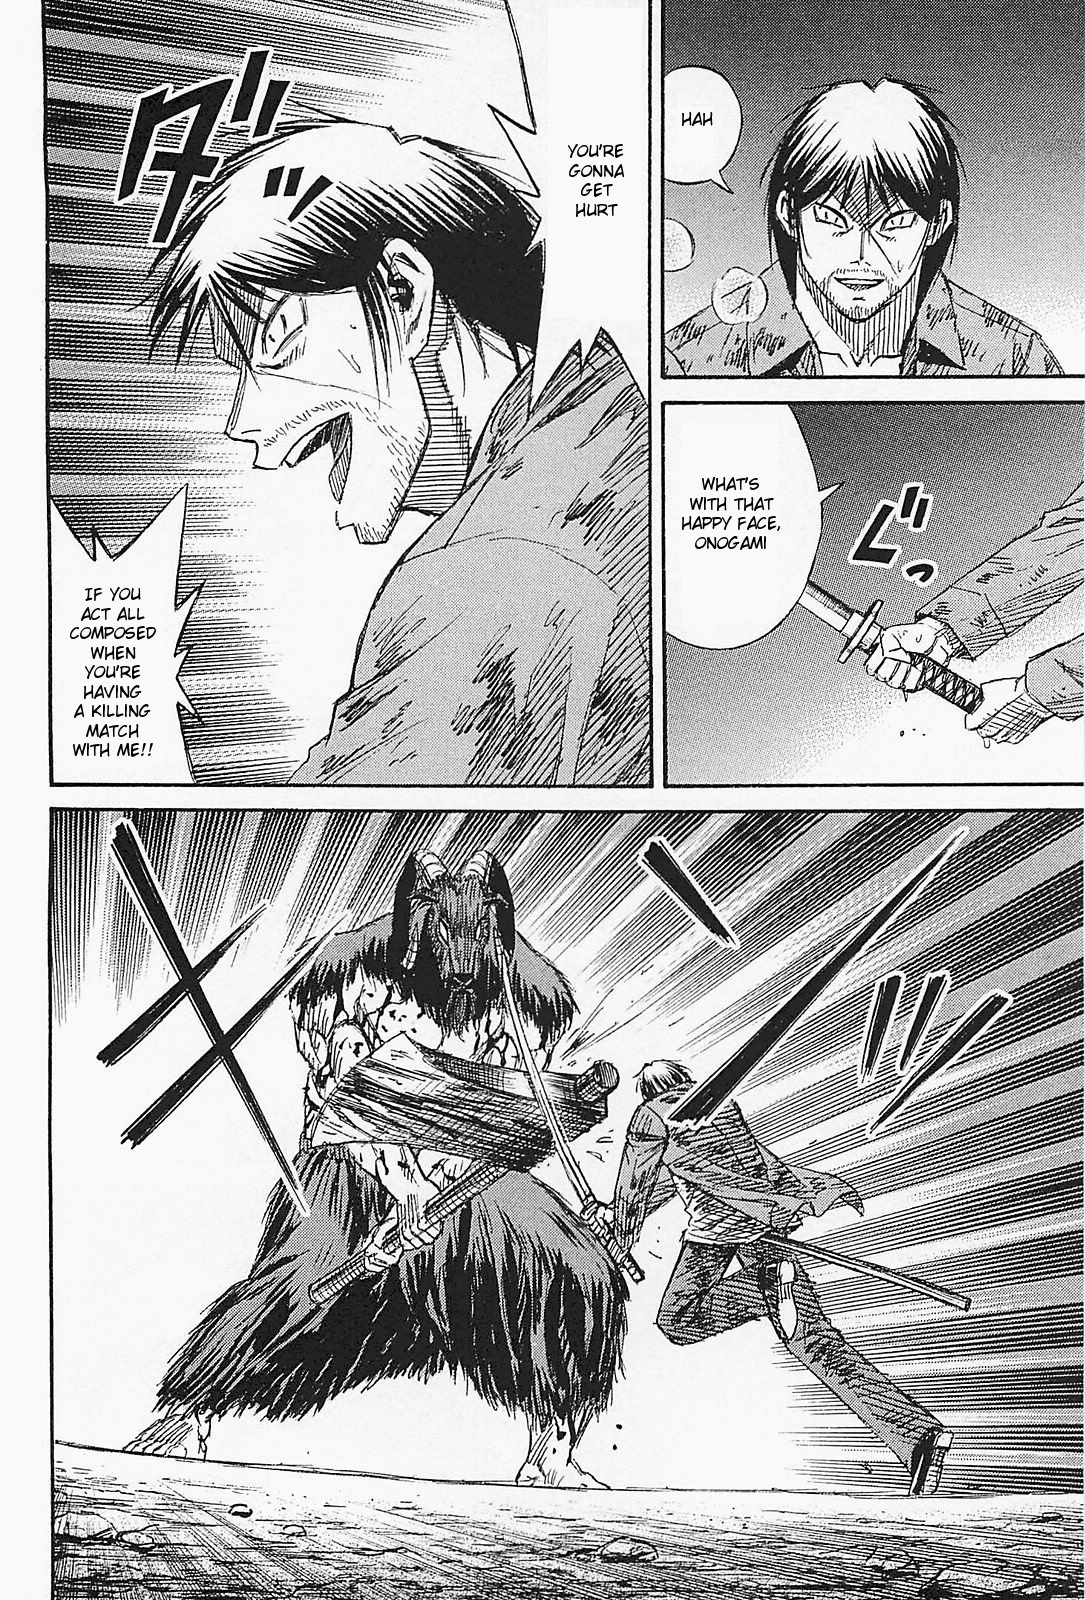 Higanjima Saigo no 47 Hiai Vol. 5 Ch. 43 Rematch